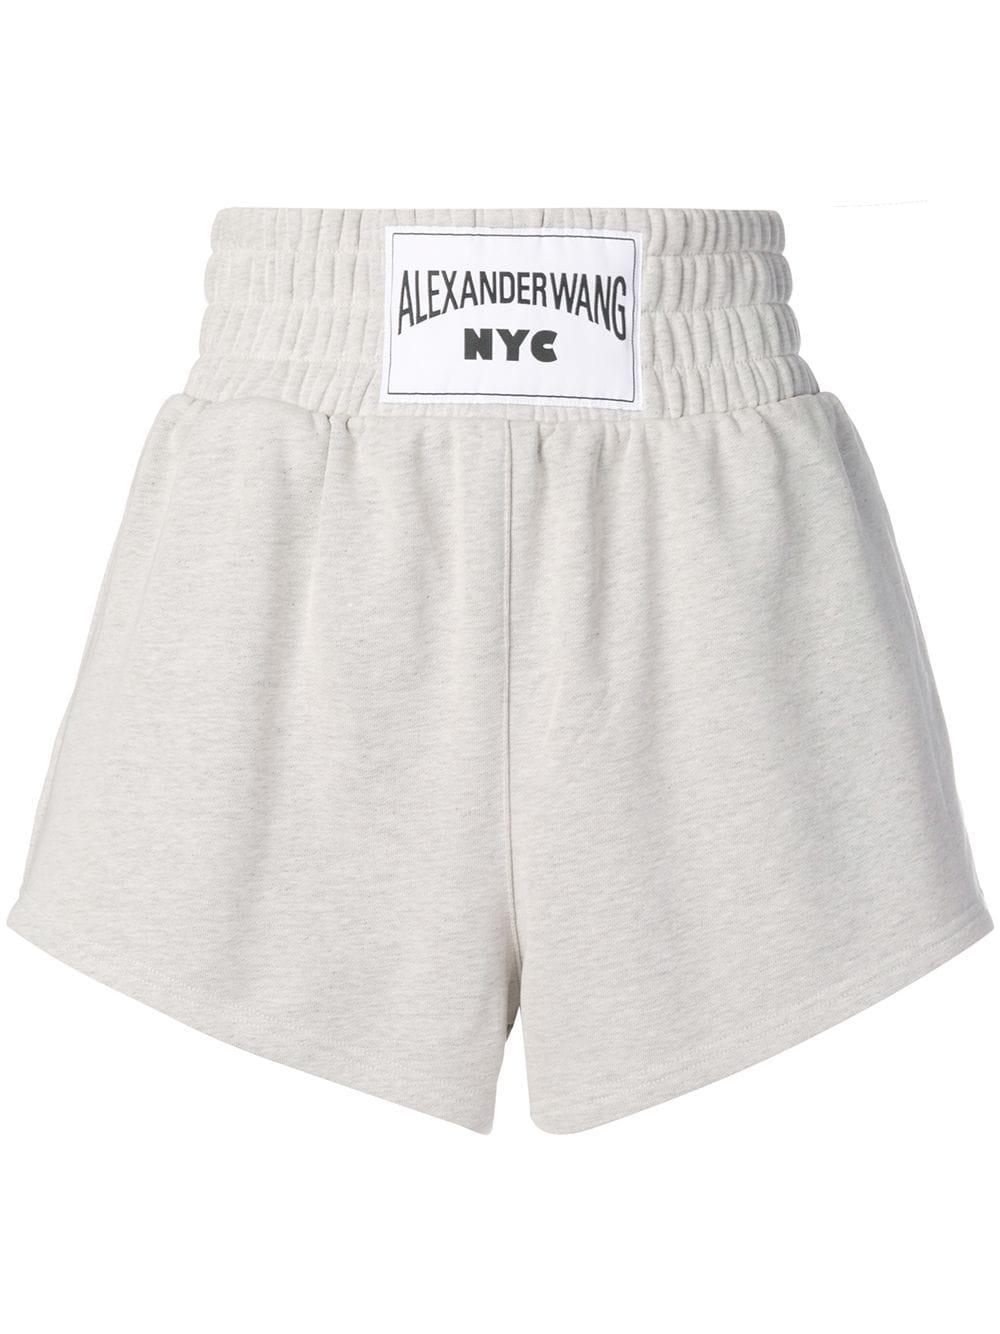 T By Alexander Wang Appliquéd Cotton-blend Terry Shorts in Grey (Grey) -  Lyst